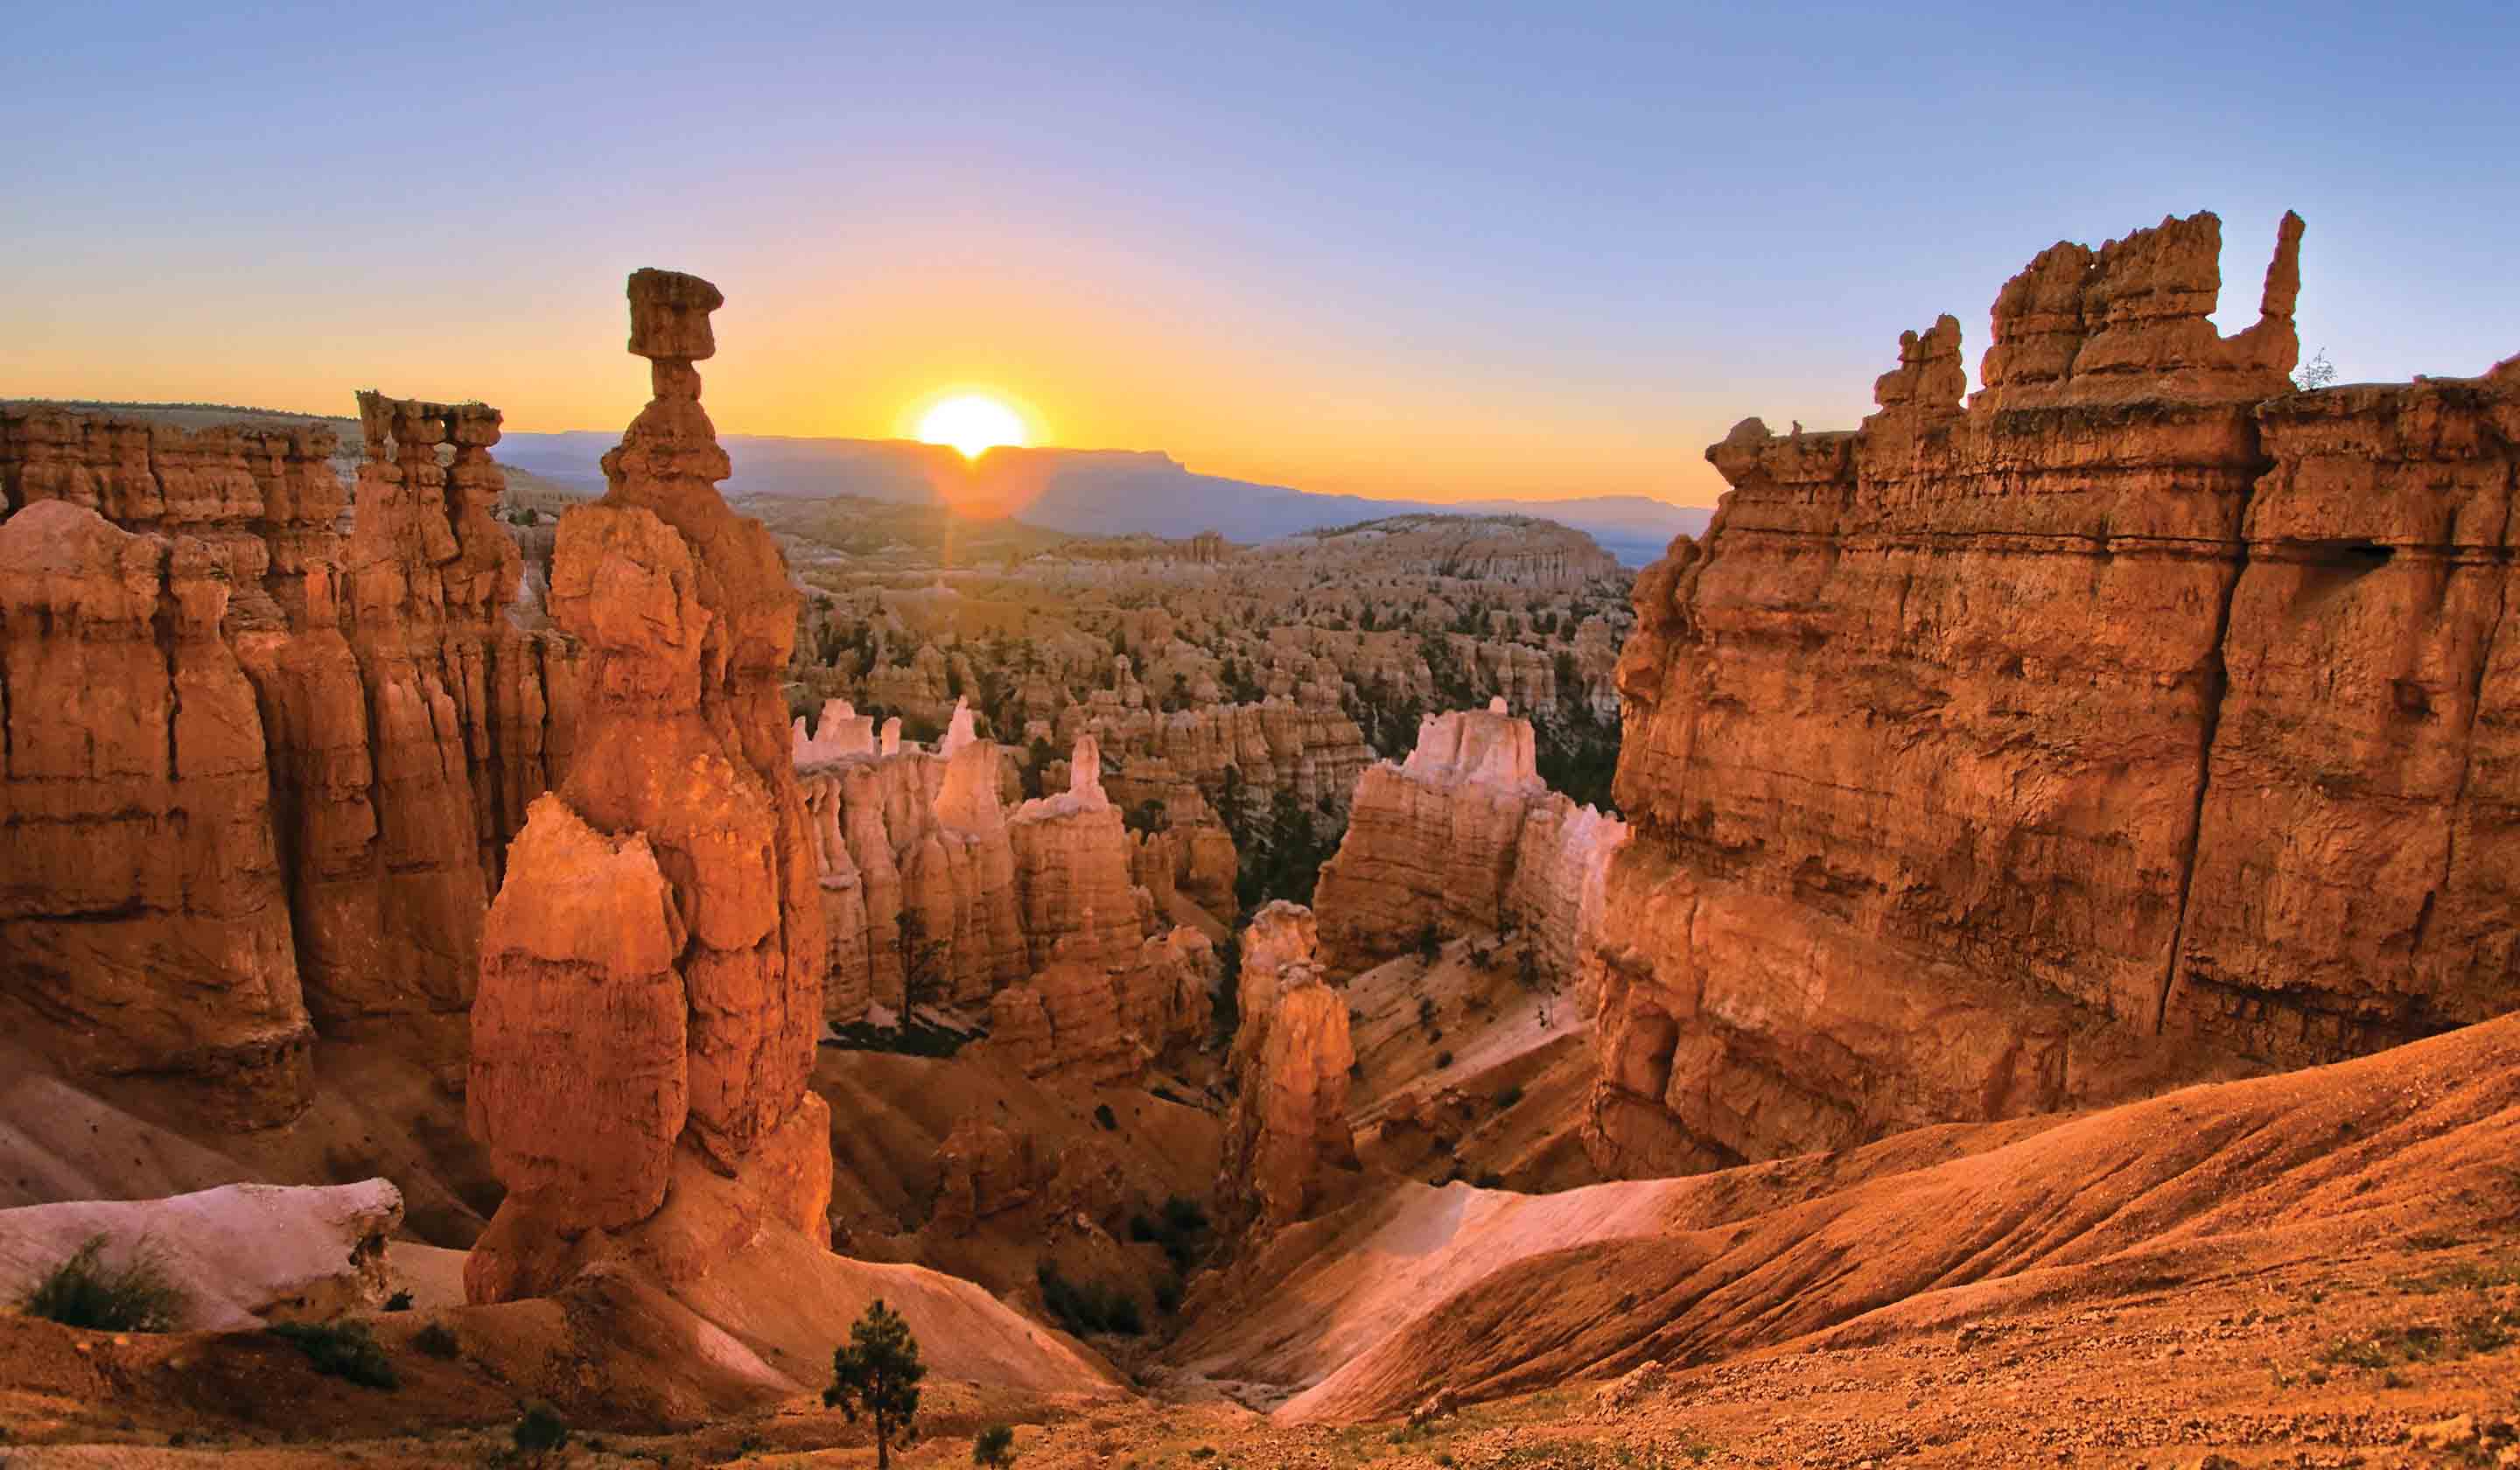 Spirit of the Desert: The National Parks of the Southwest